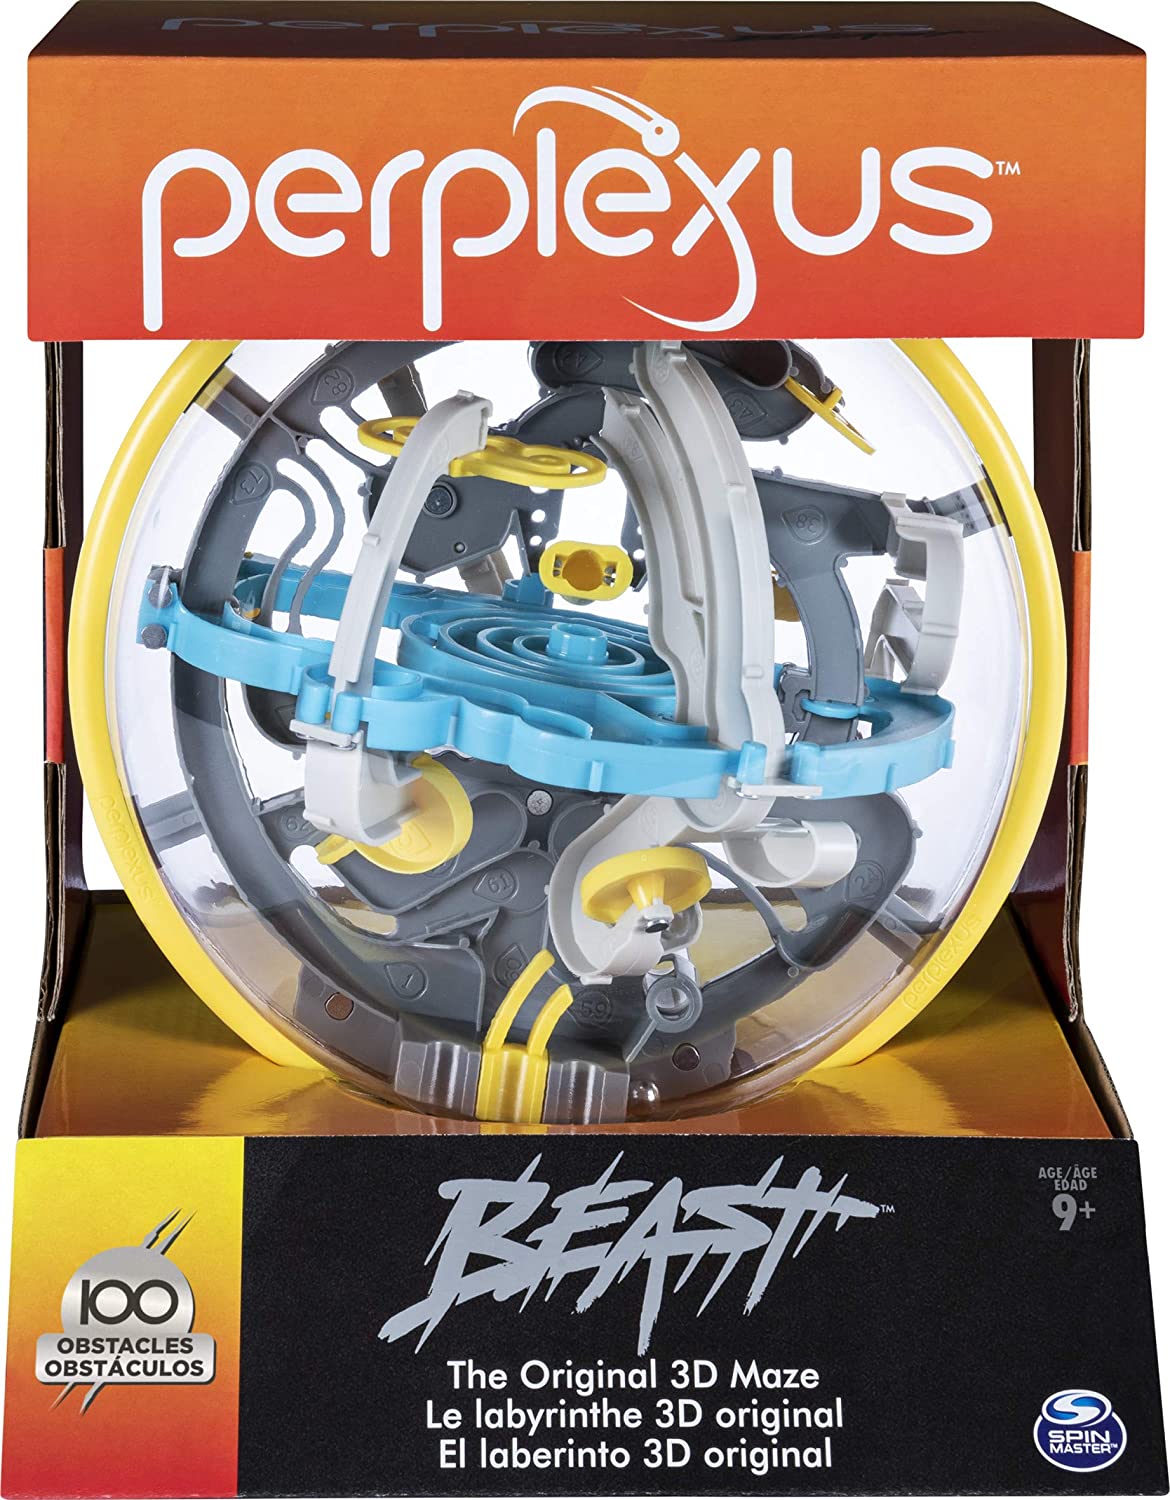 Perplexus: Beast - Third Eye